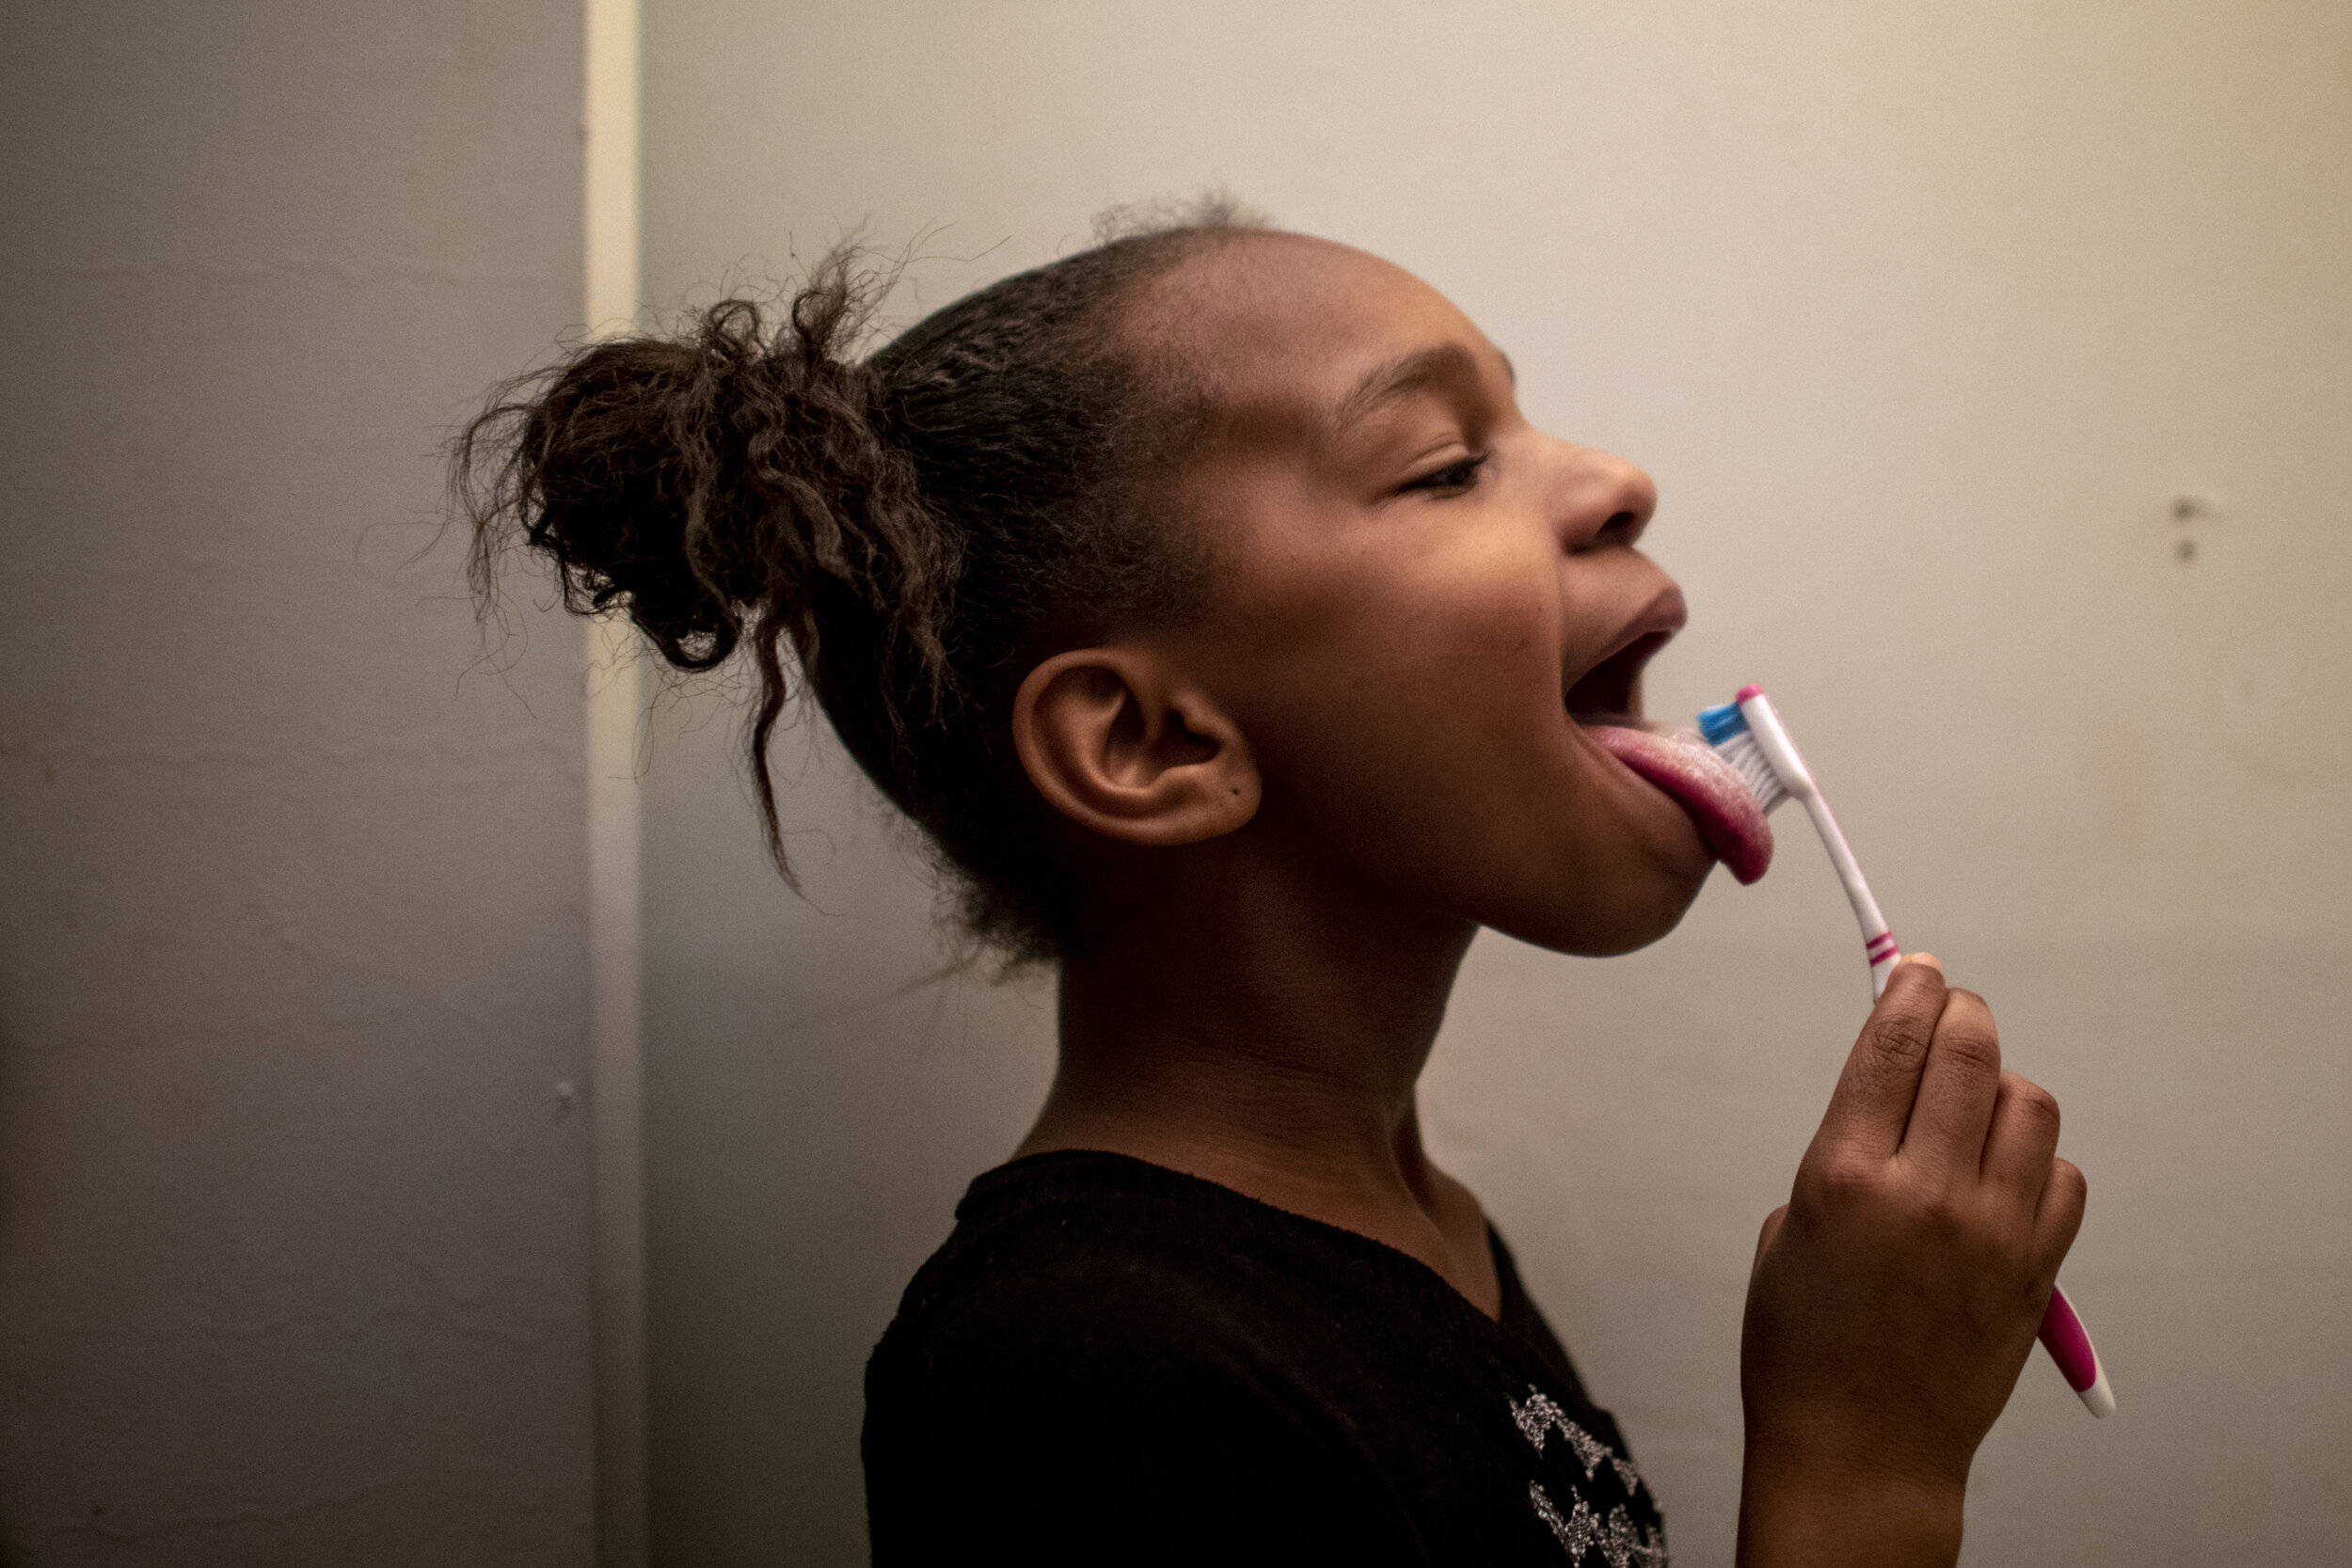  Amariyonna, 9,  brushes her teeth. 